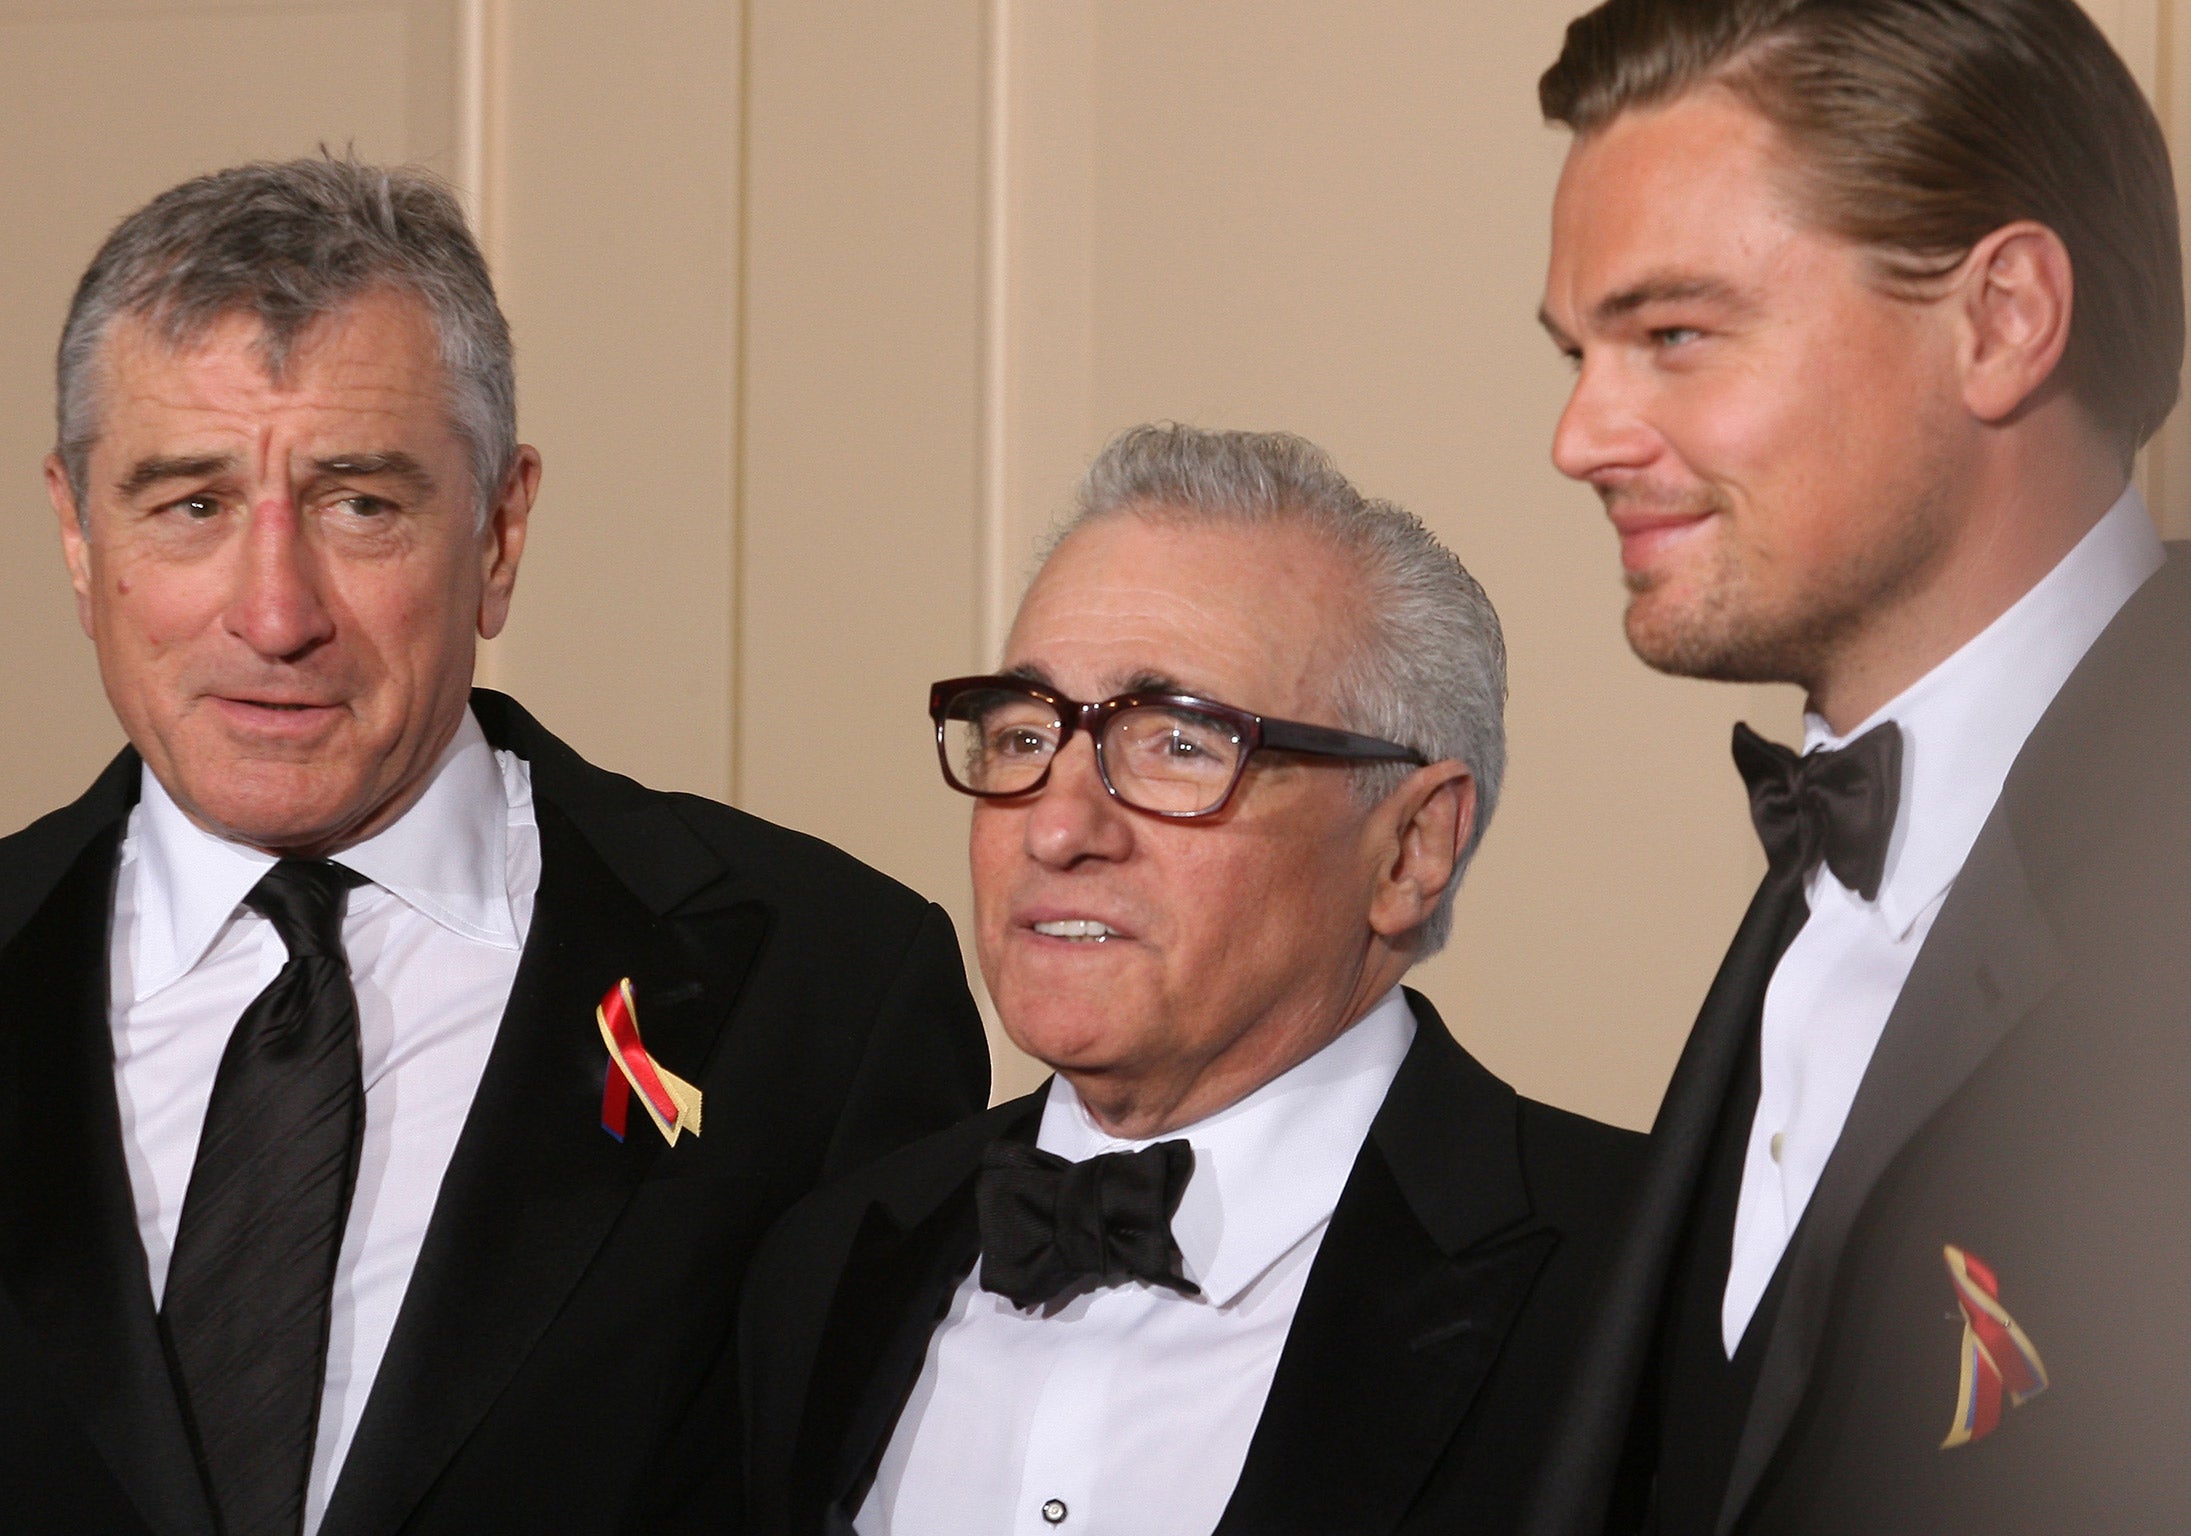 Robert De Niro, Martin Scorsese and DiCaprio, at an awards show in 2010